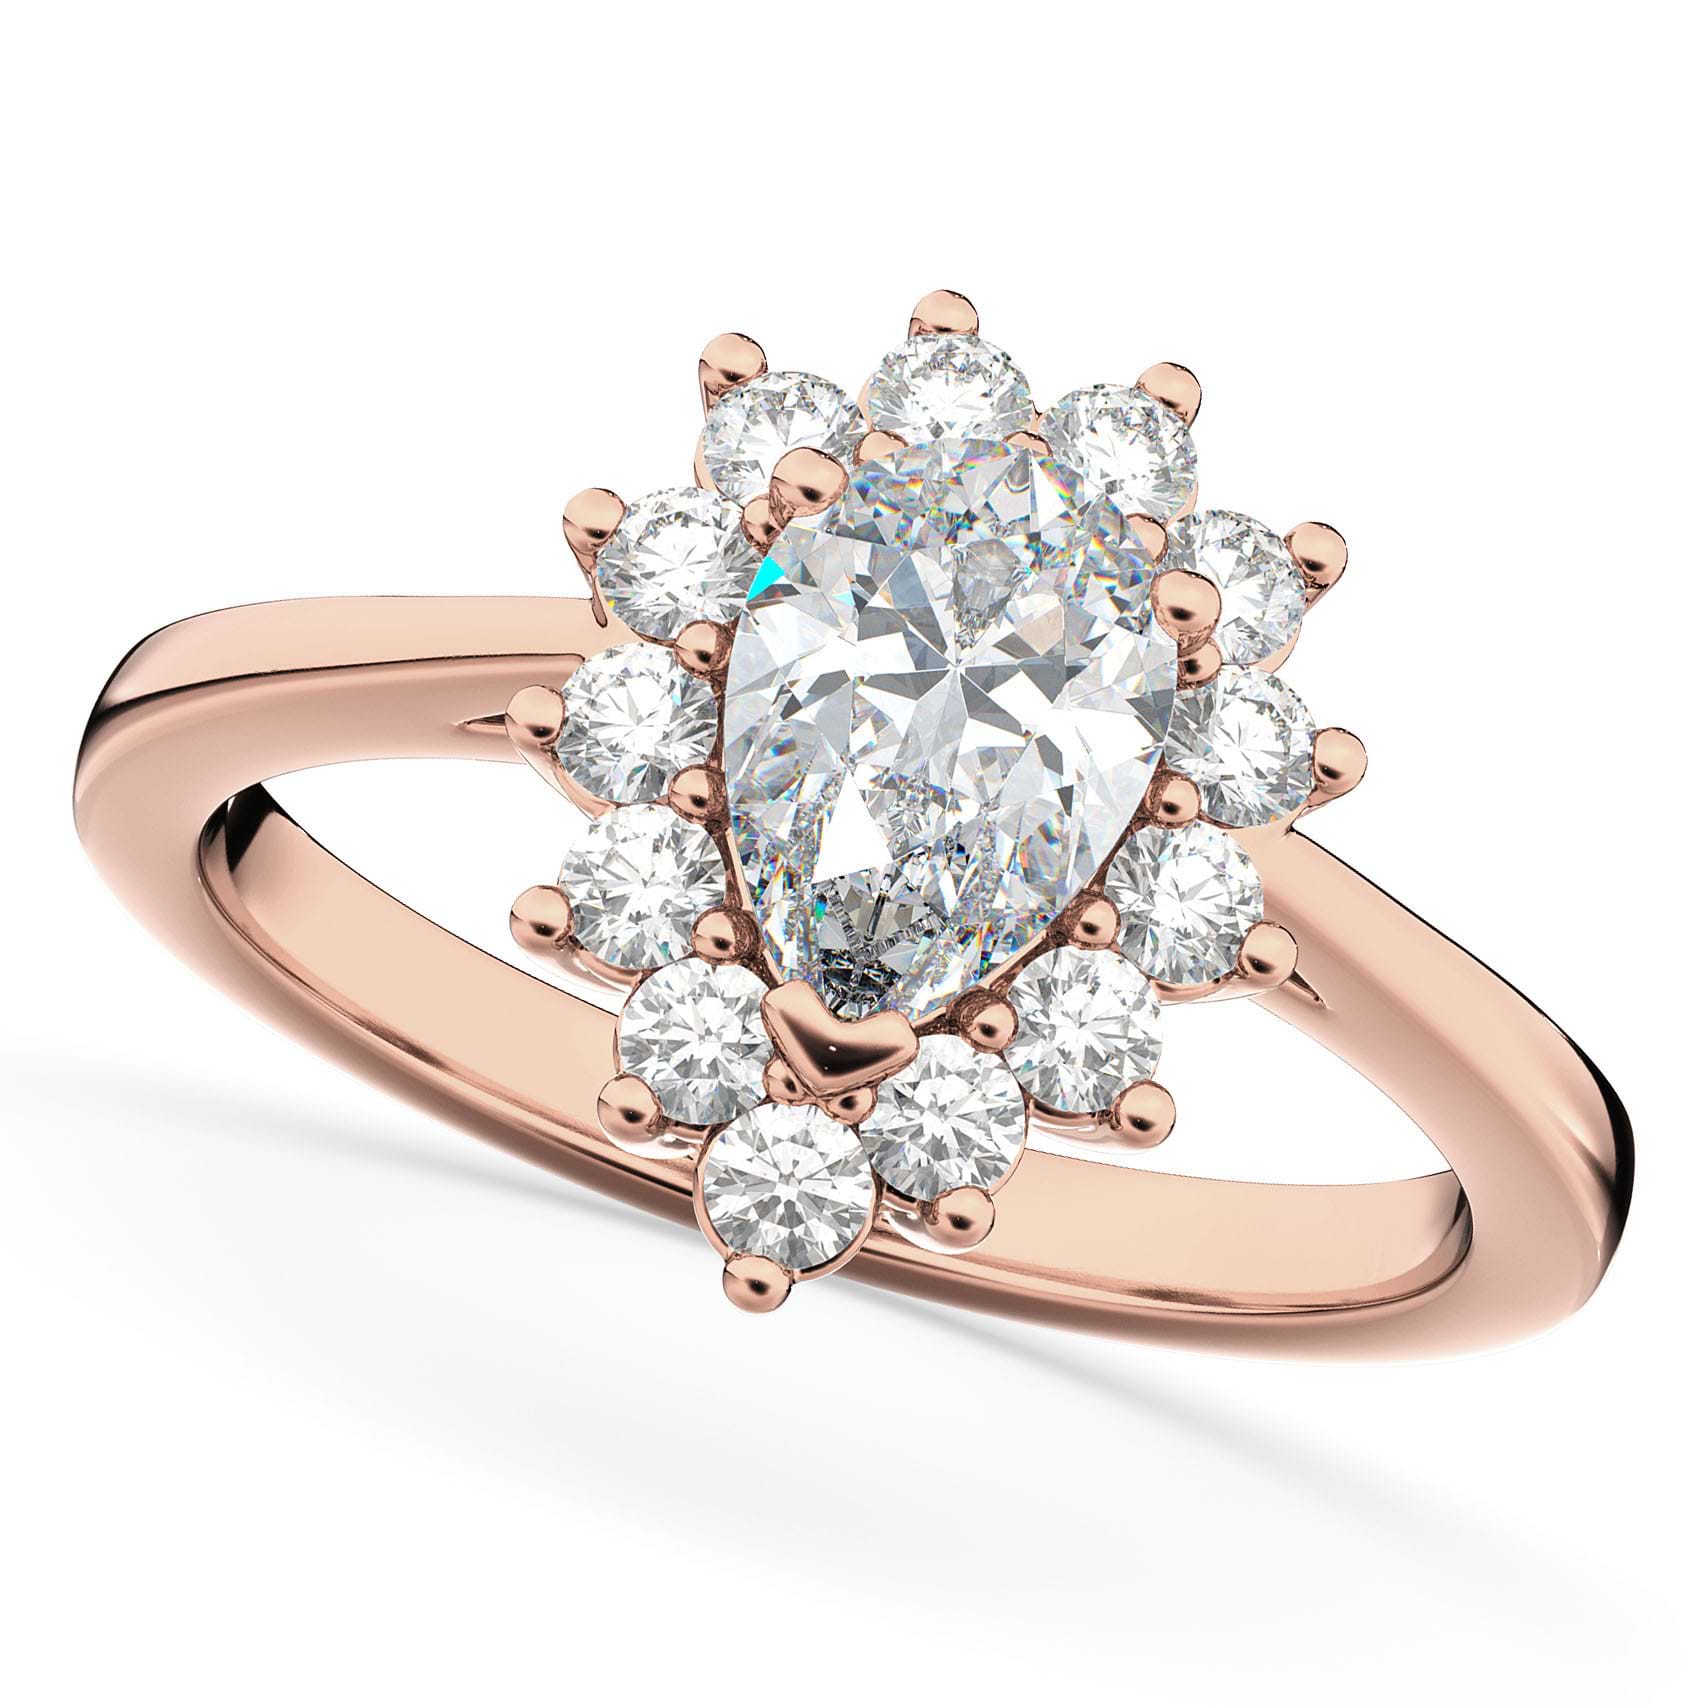 Halo Moissanite & Diamond Floral Pear Shaped Fashion Ring 14k Rose Gold (1.11ct)